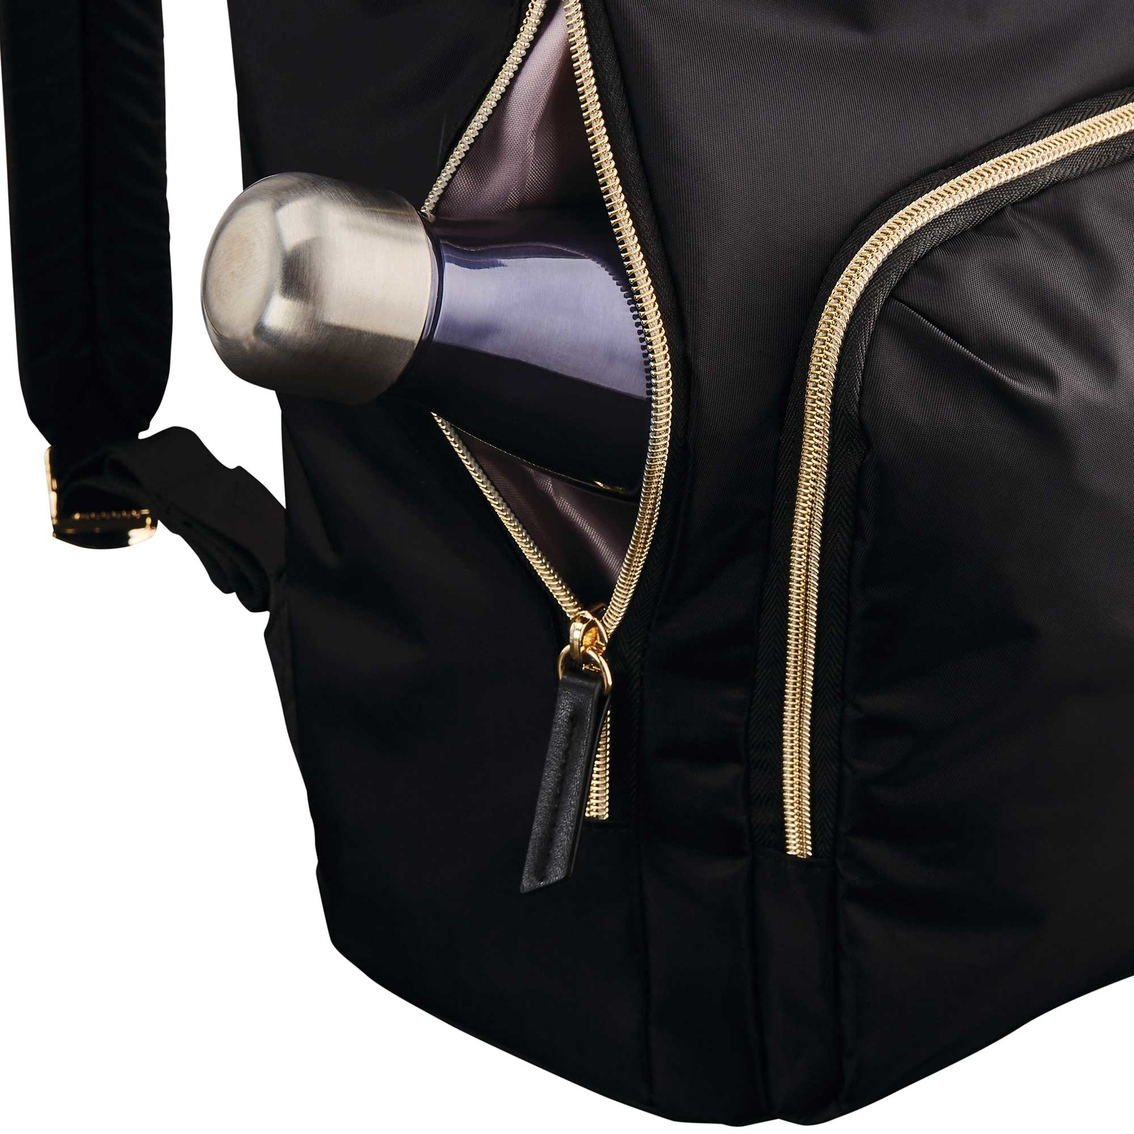 Samsonite Mobile Solution Deluxe Backpack - Image 8 of 10